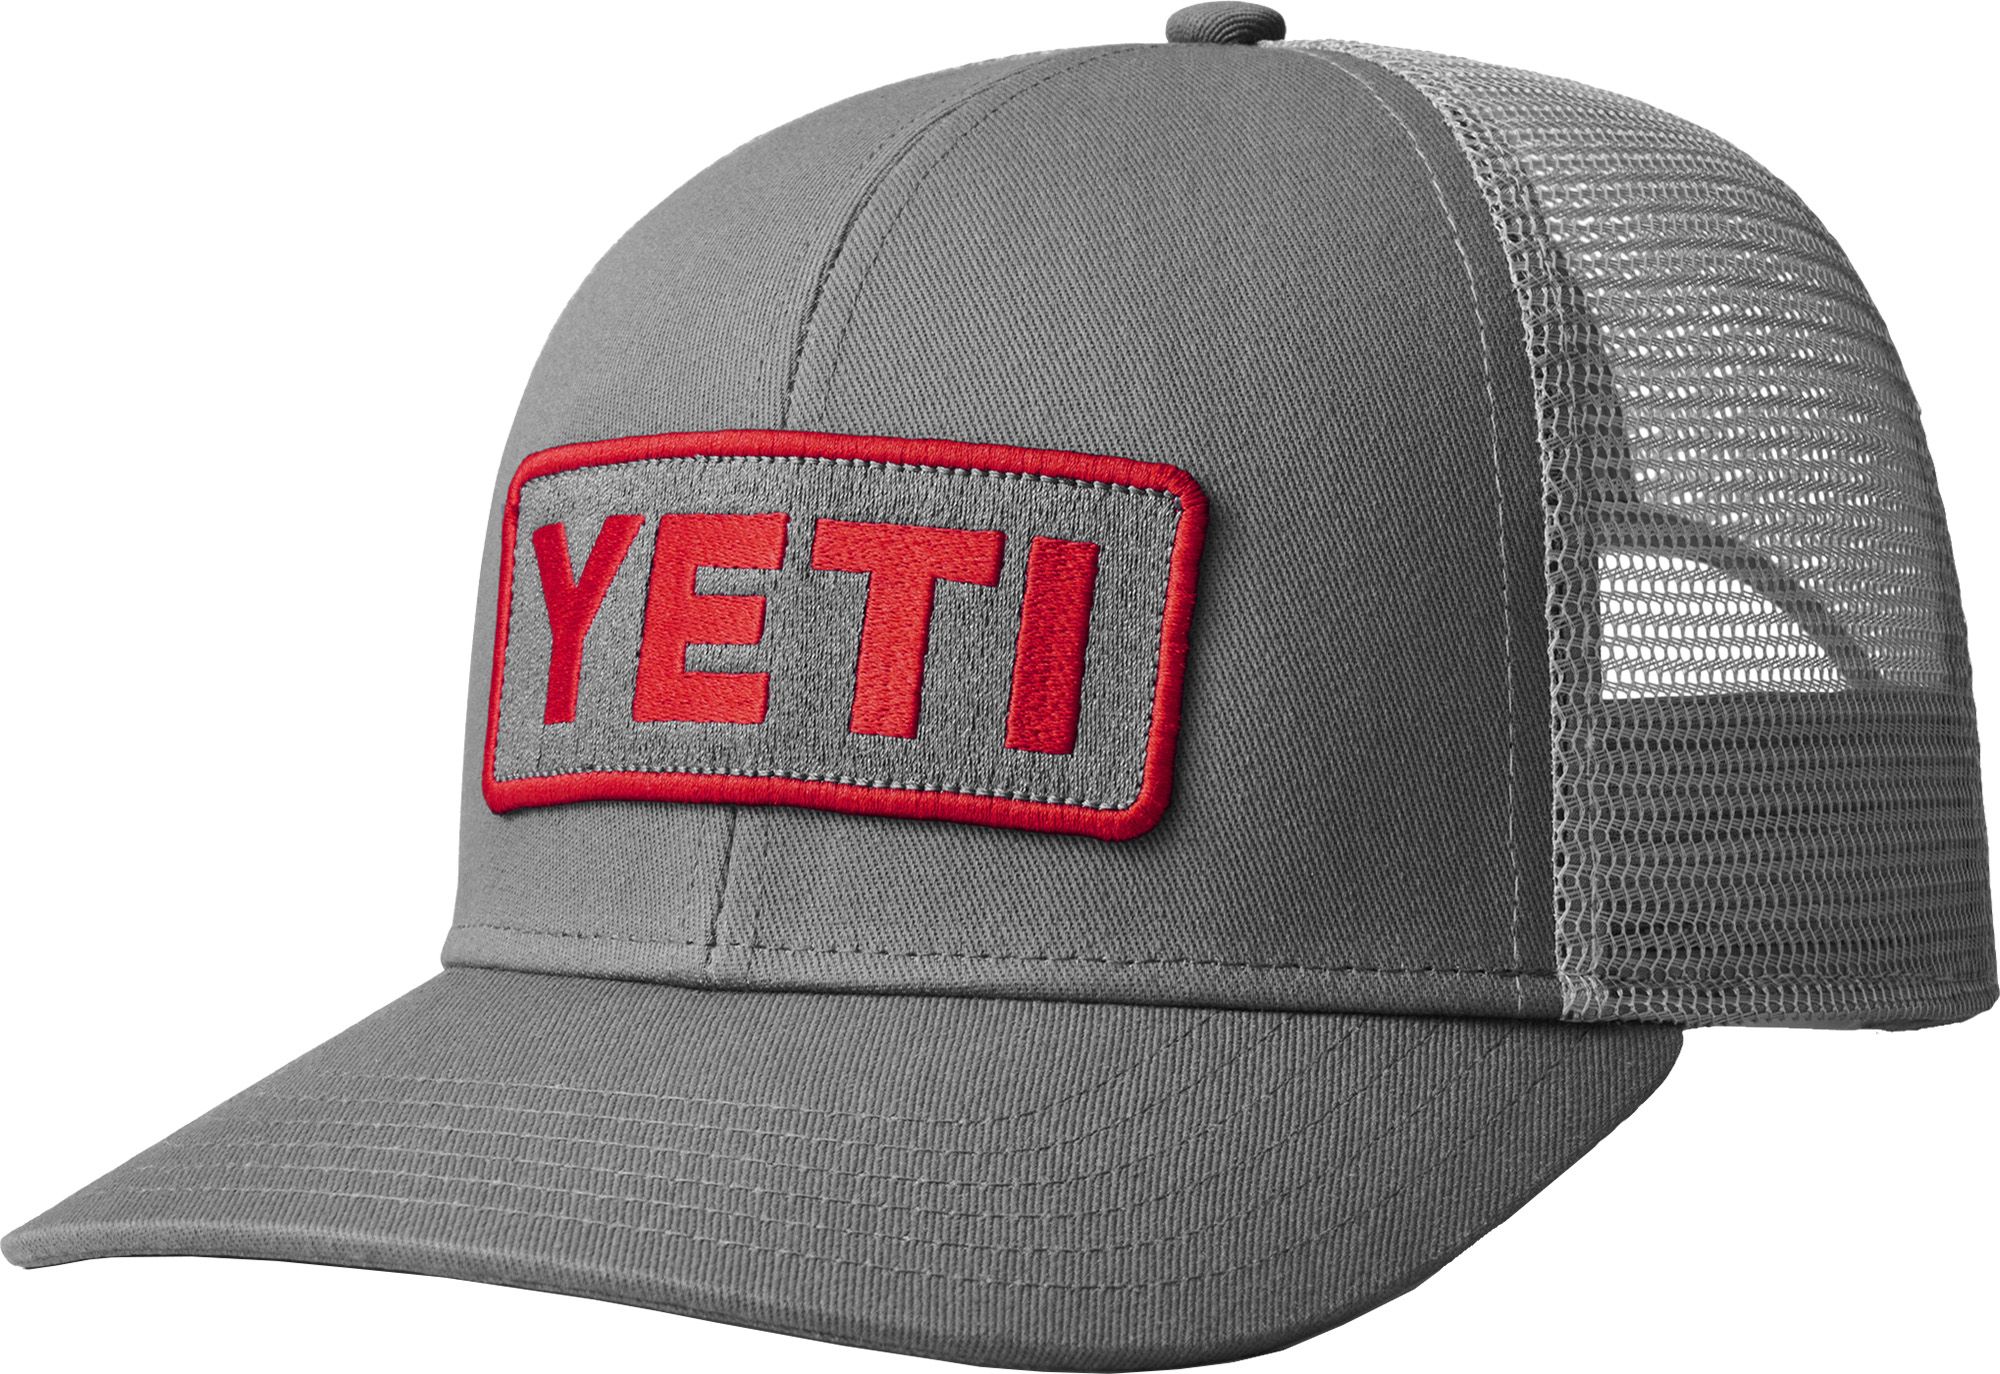 YETI Skiff Trucker Hat